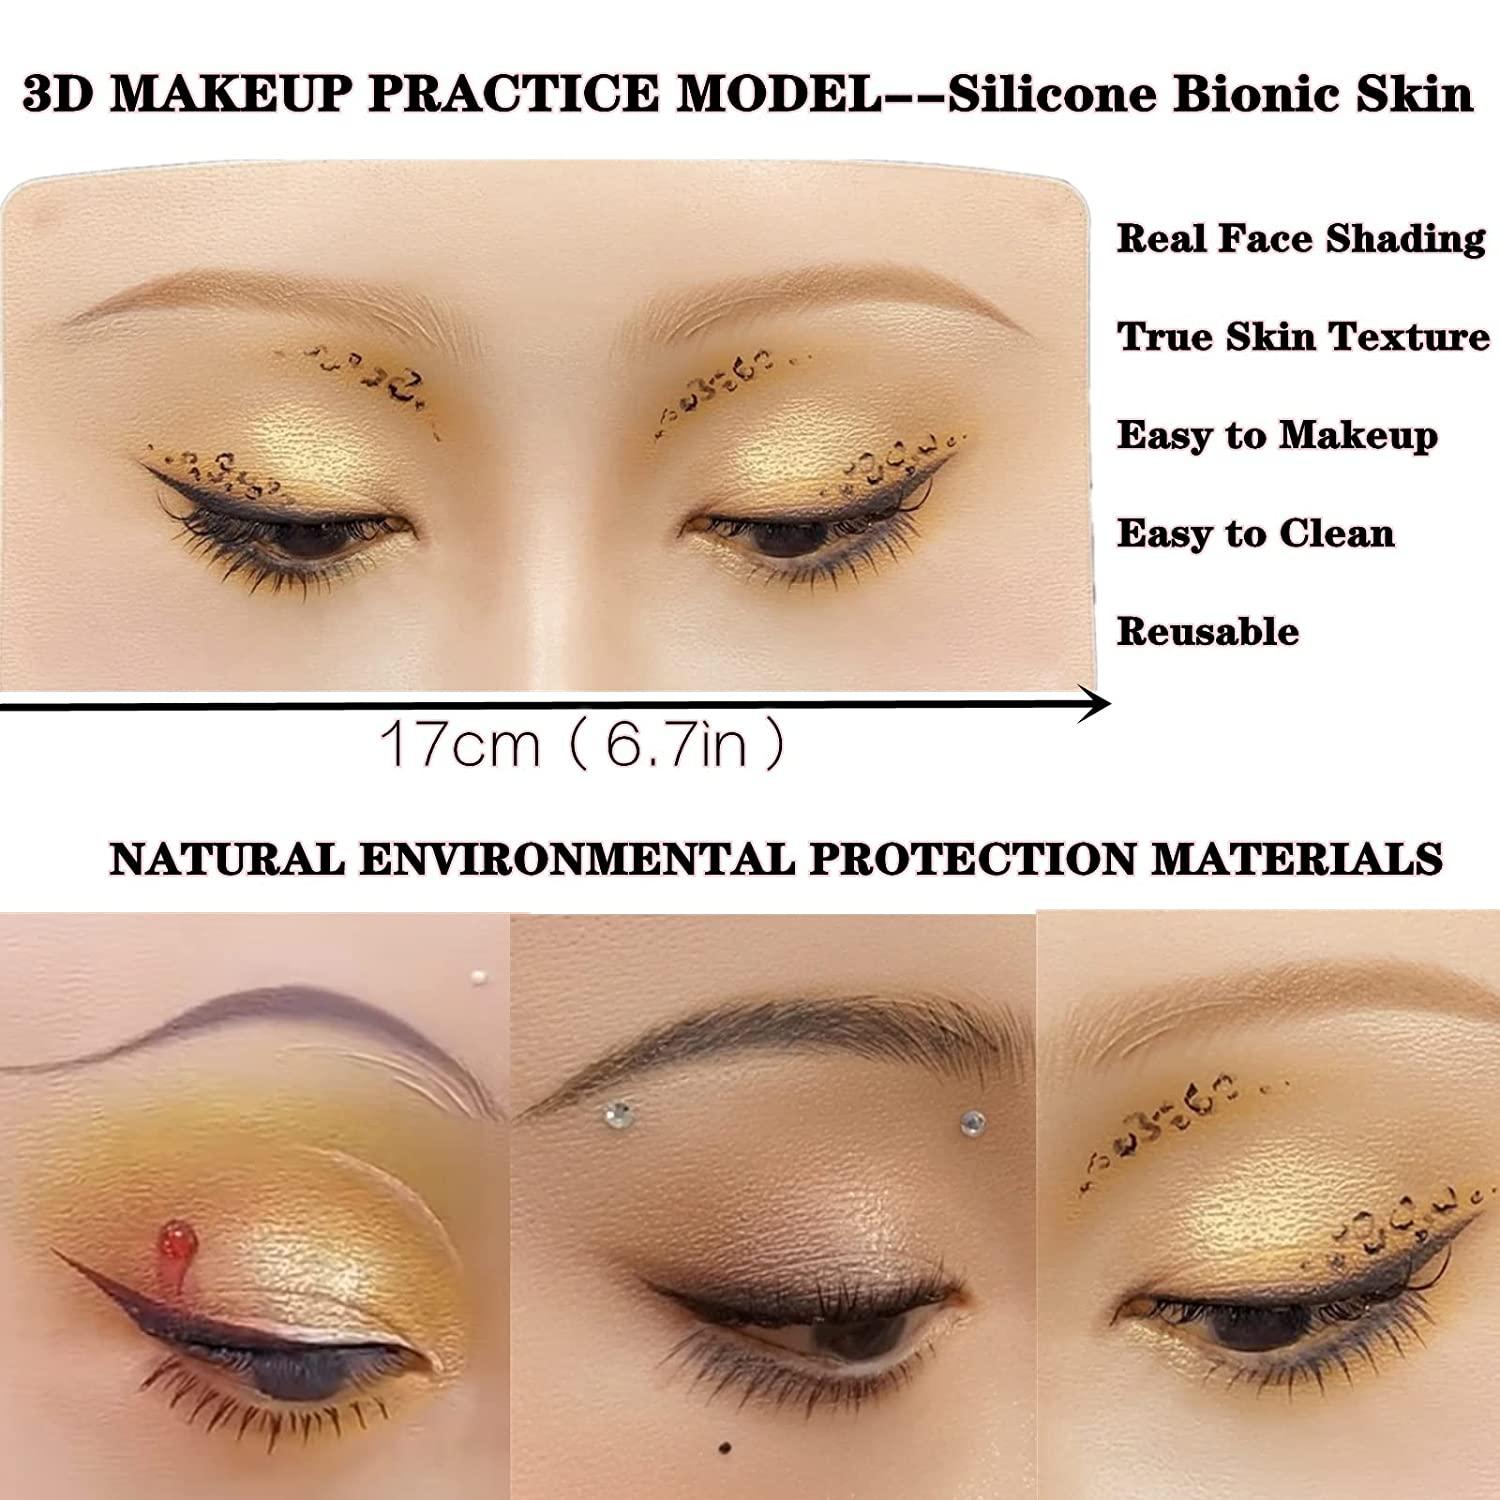 Makeup Practice Face Silicone False Face Eyes Makeup Mannequin Reusable Makeup Practice Board Practicing Makeup Aid for Makeup Cosmetologists and